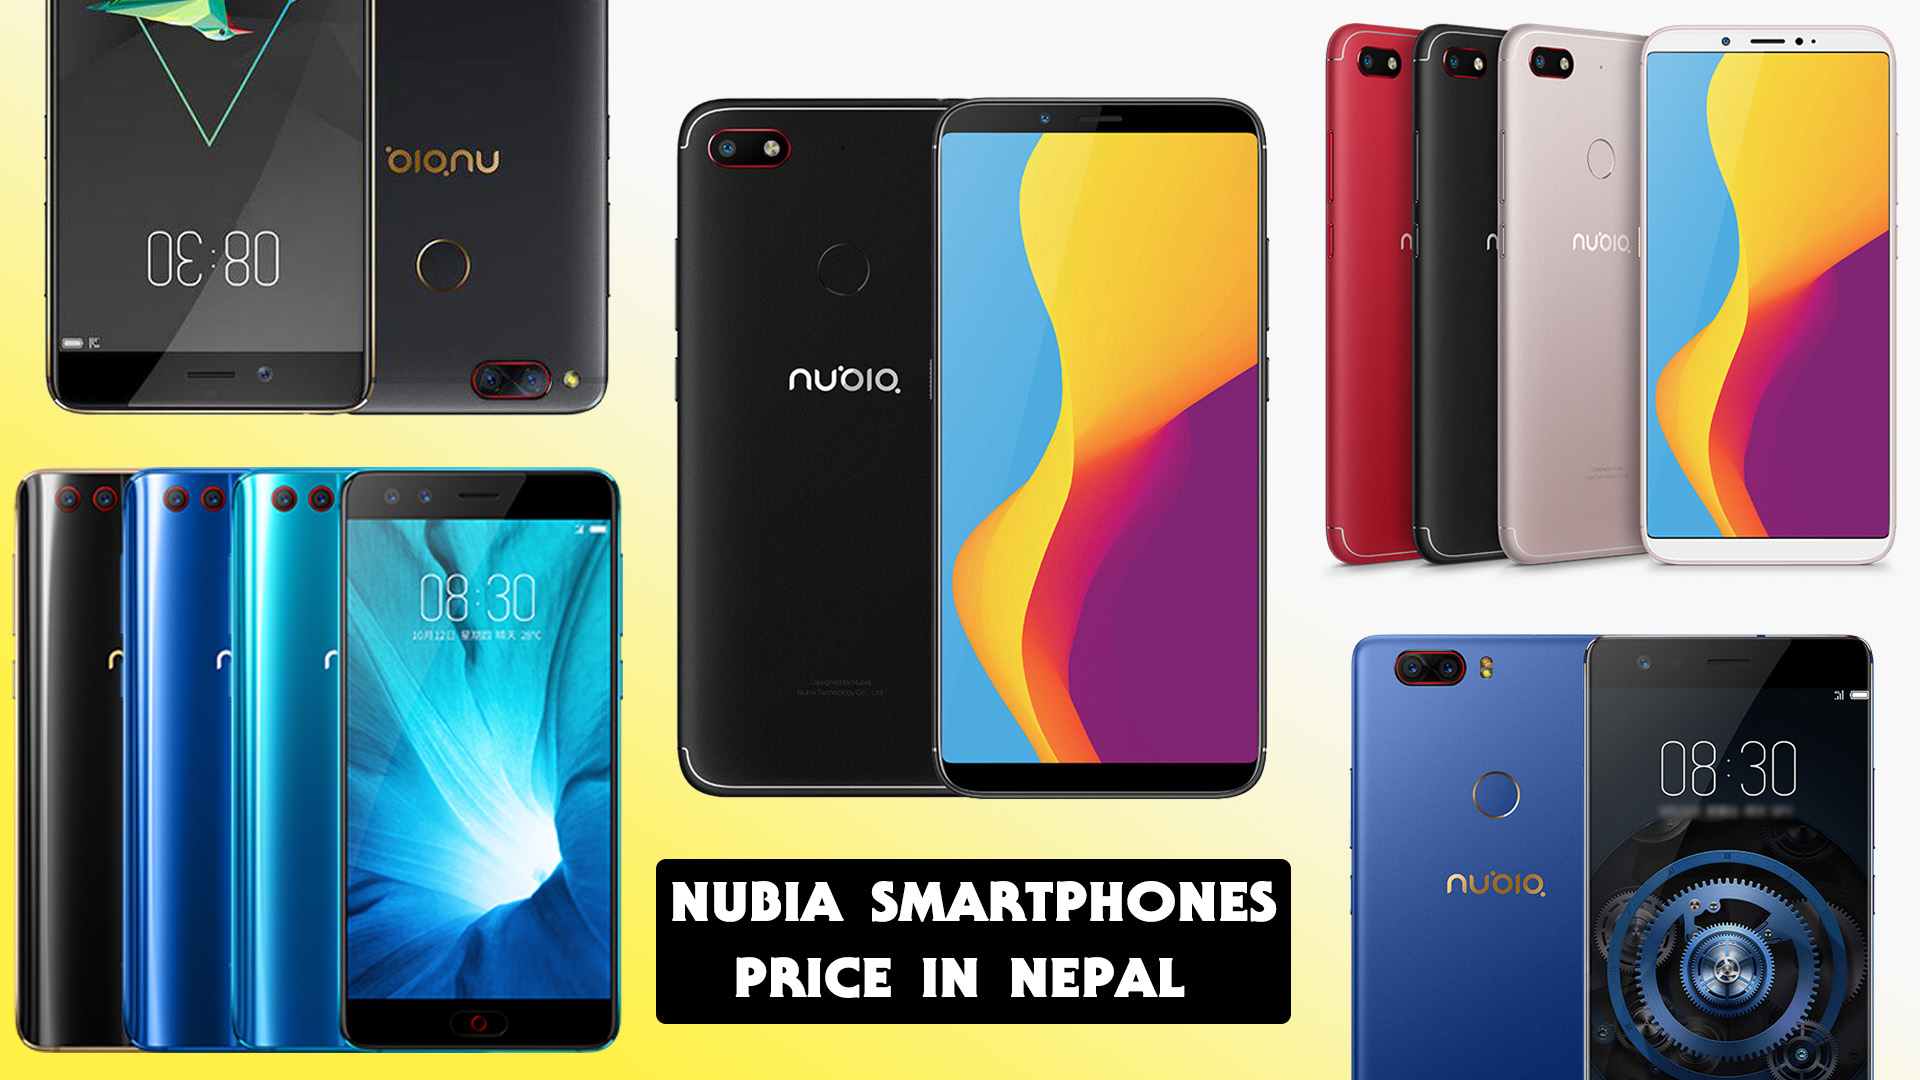 Nubia mobiles price in Nepal